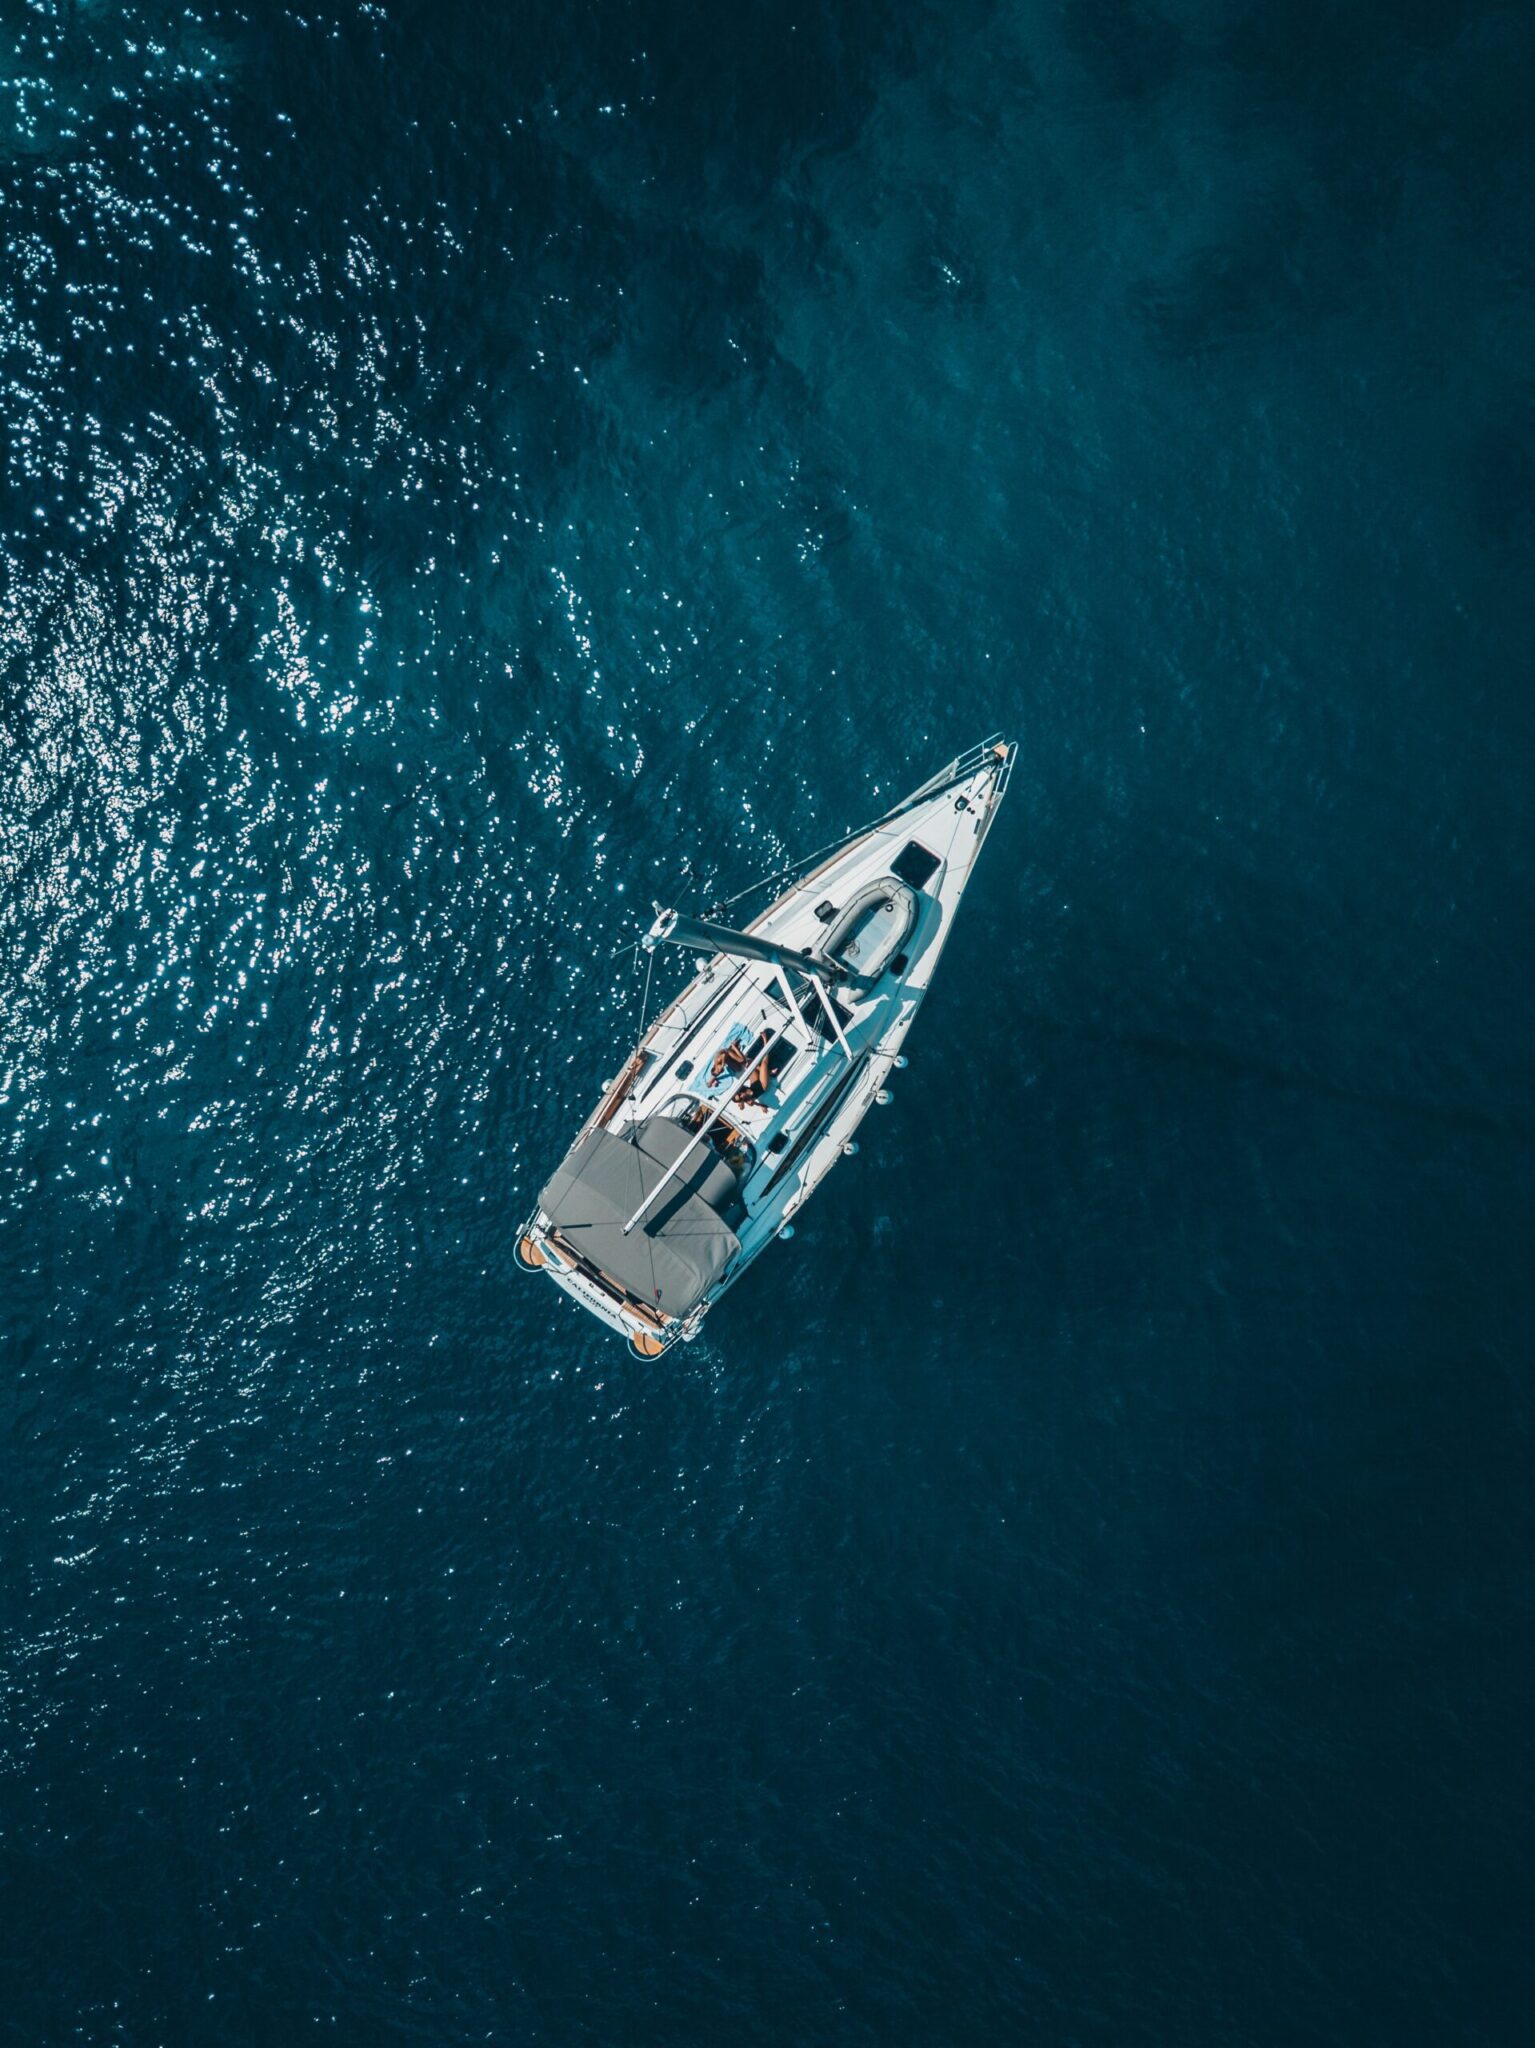 Monohull sailboat in blue ocean